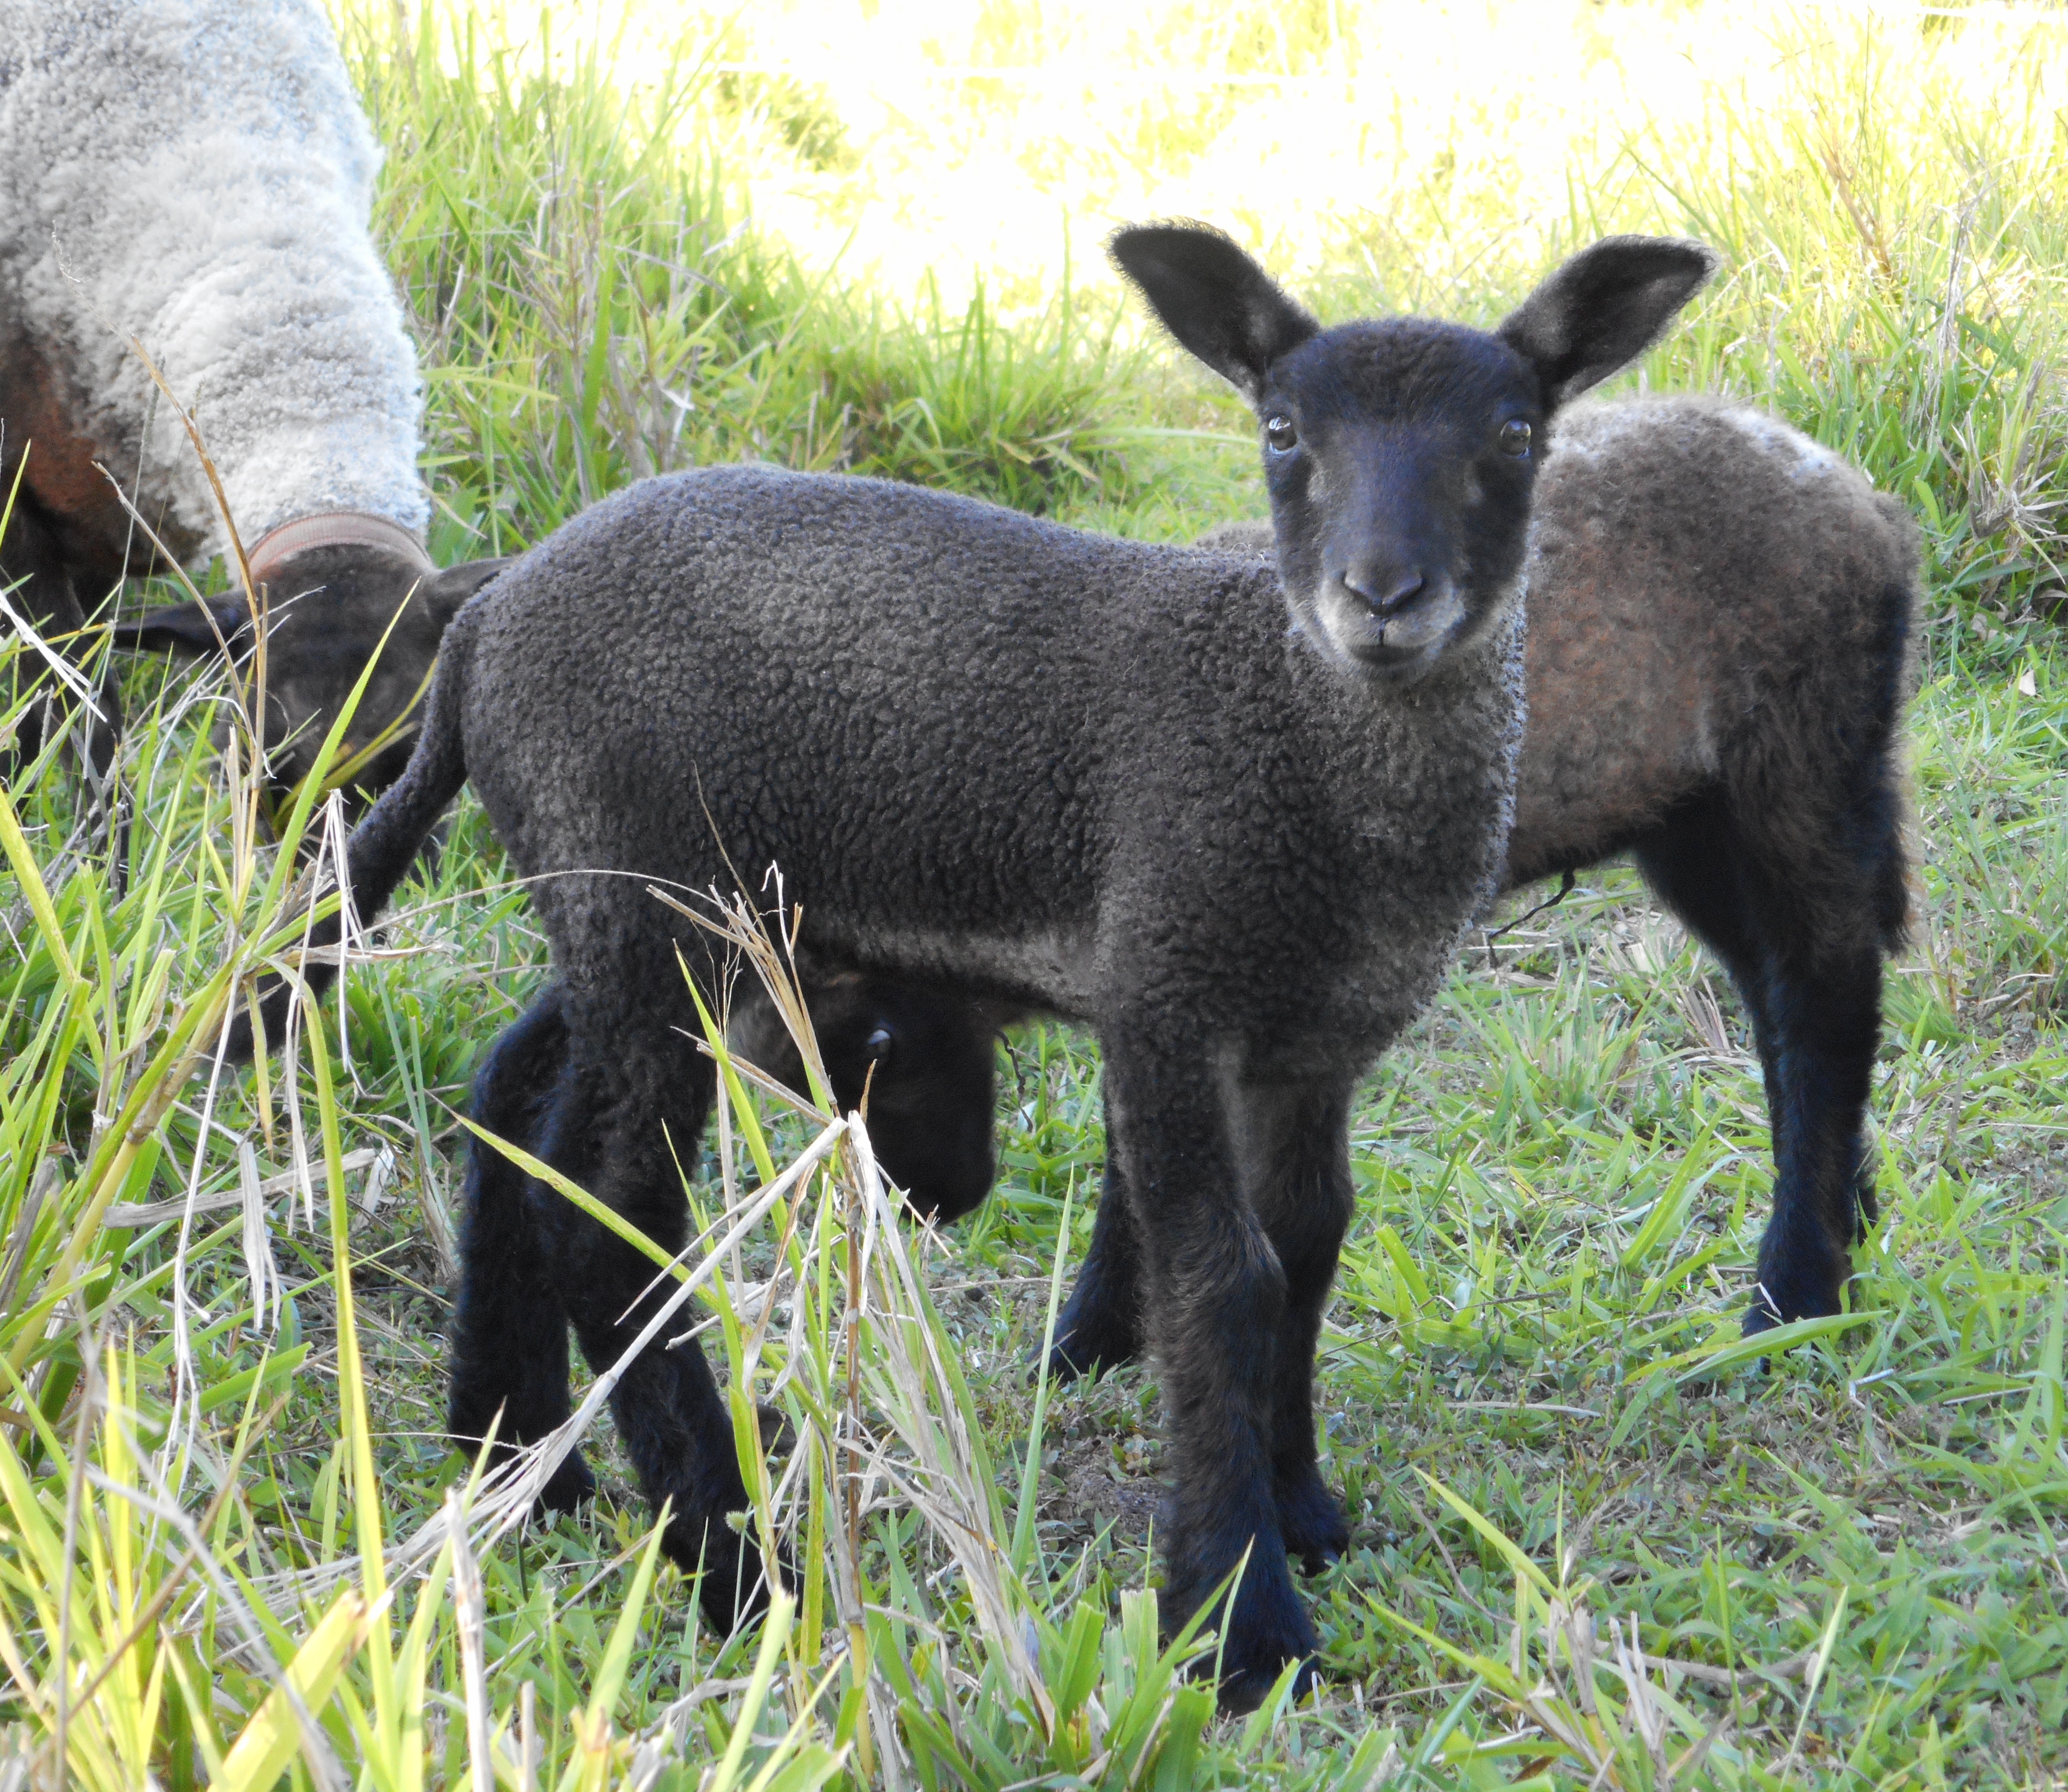 Cocoa's 2nd born lamb